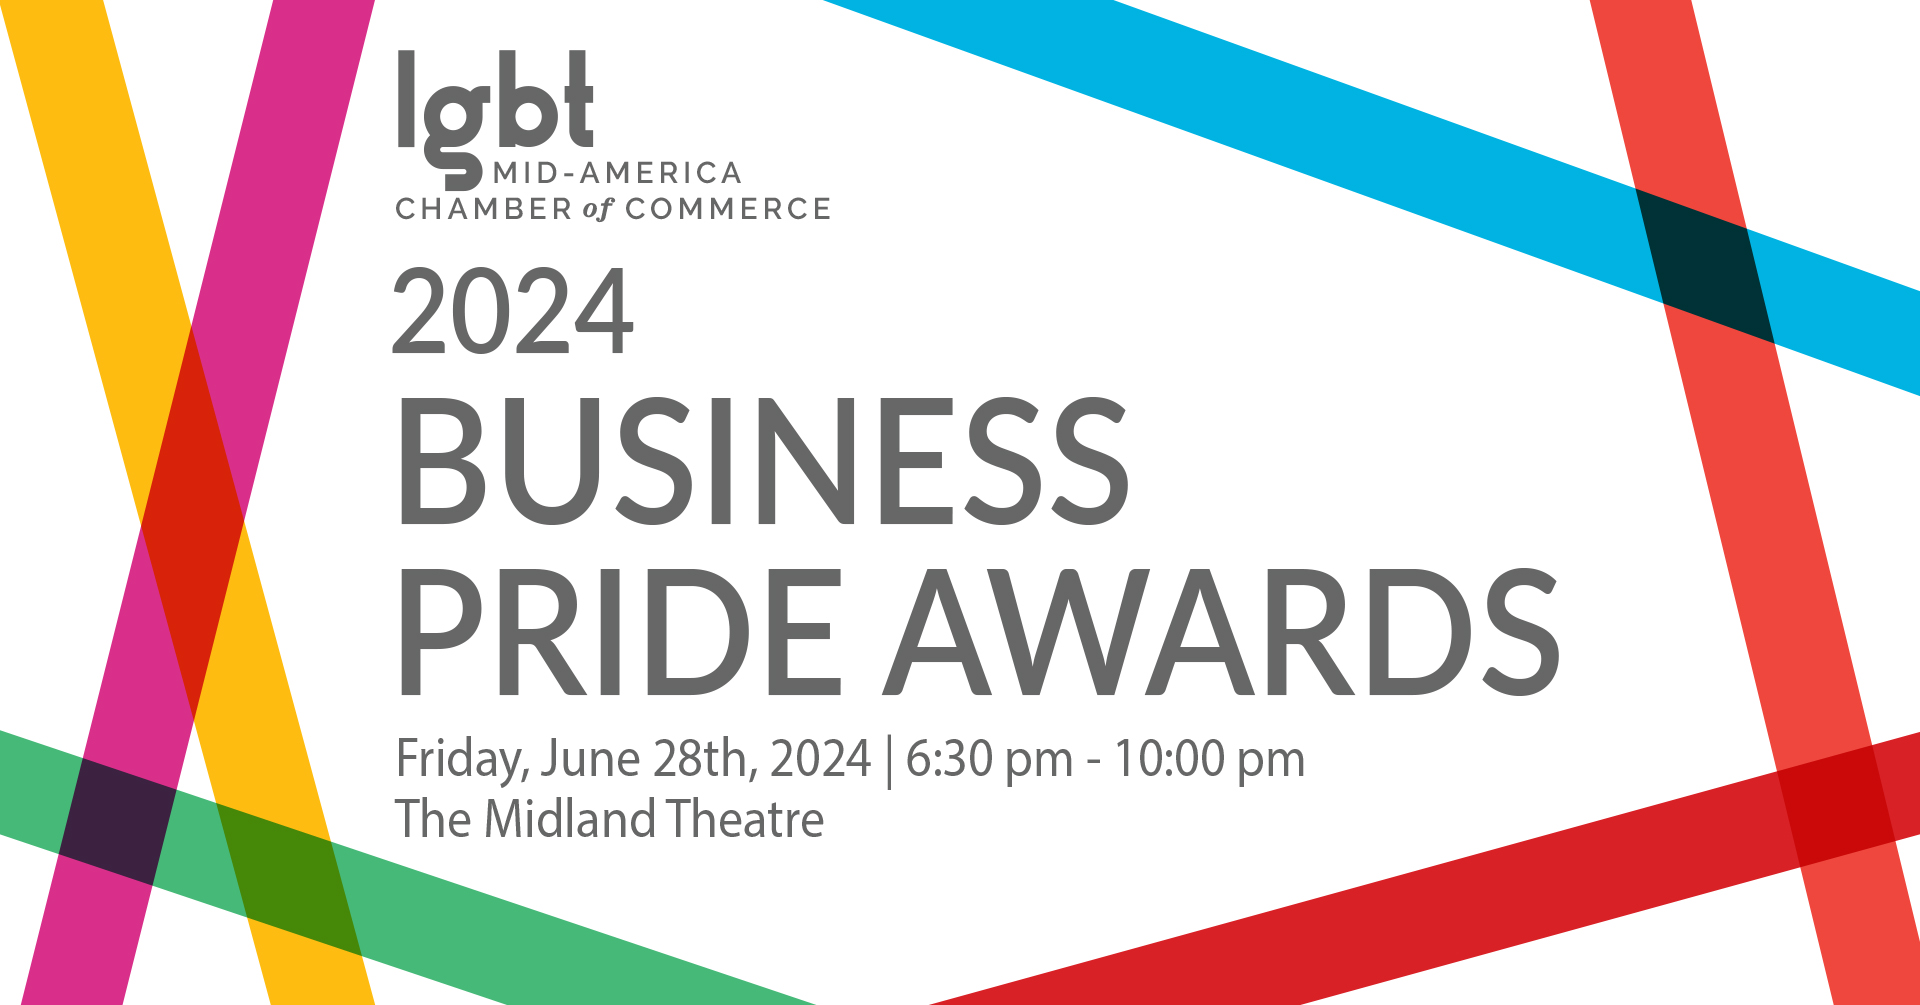 2024 Business Pride Awards facebook event cover